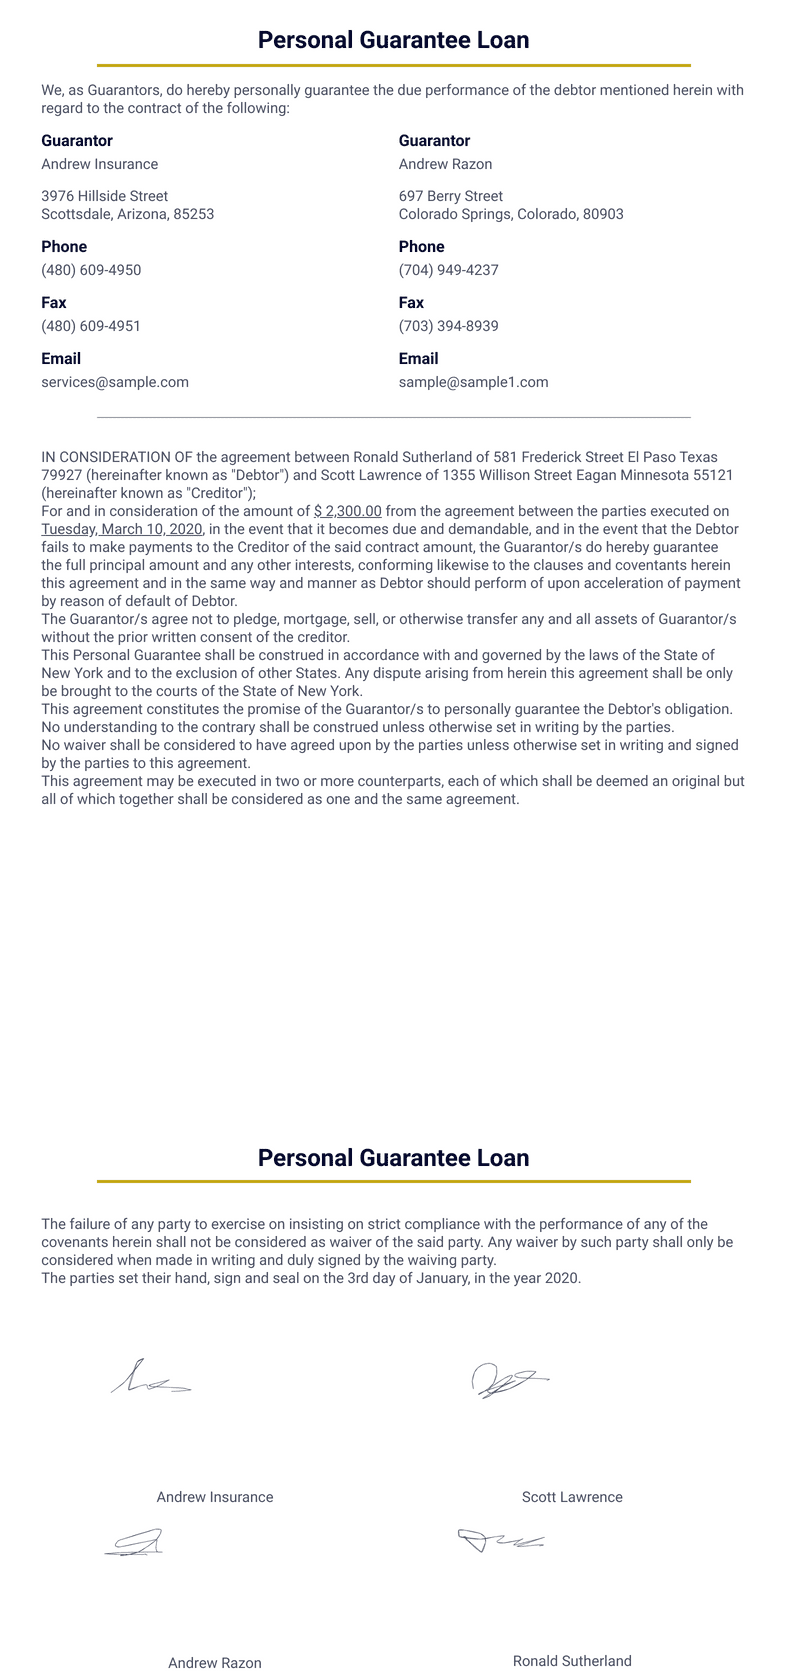 Personal Guarantee Loan